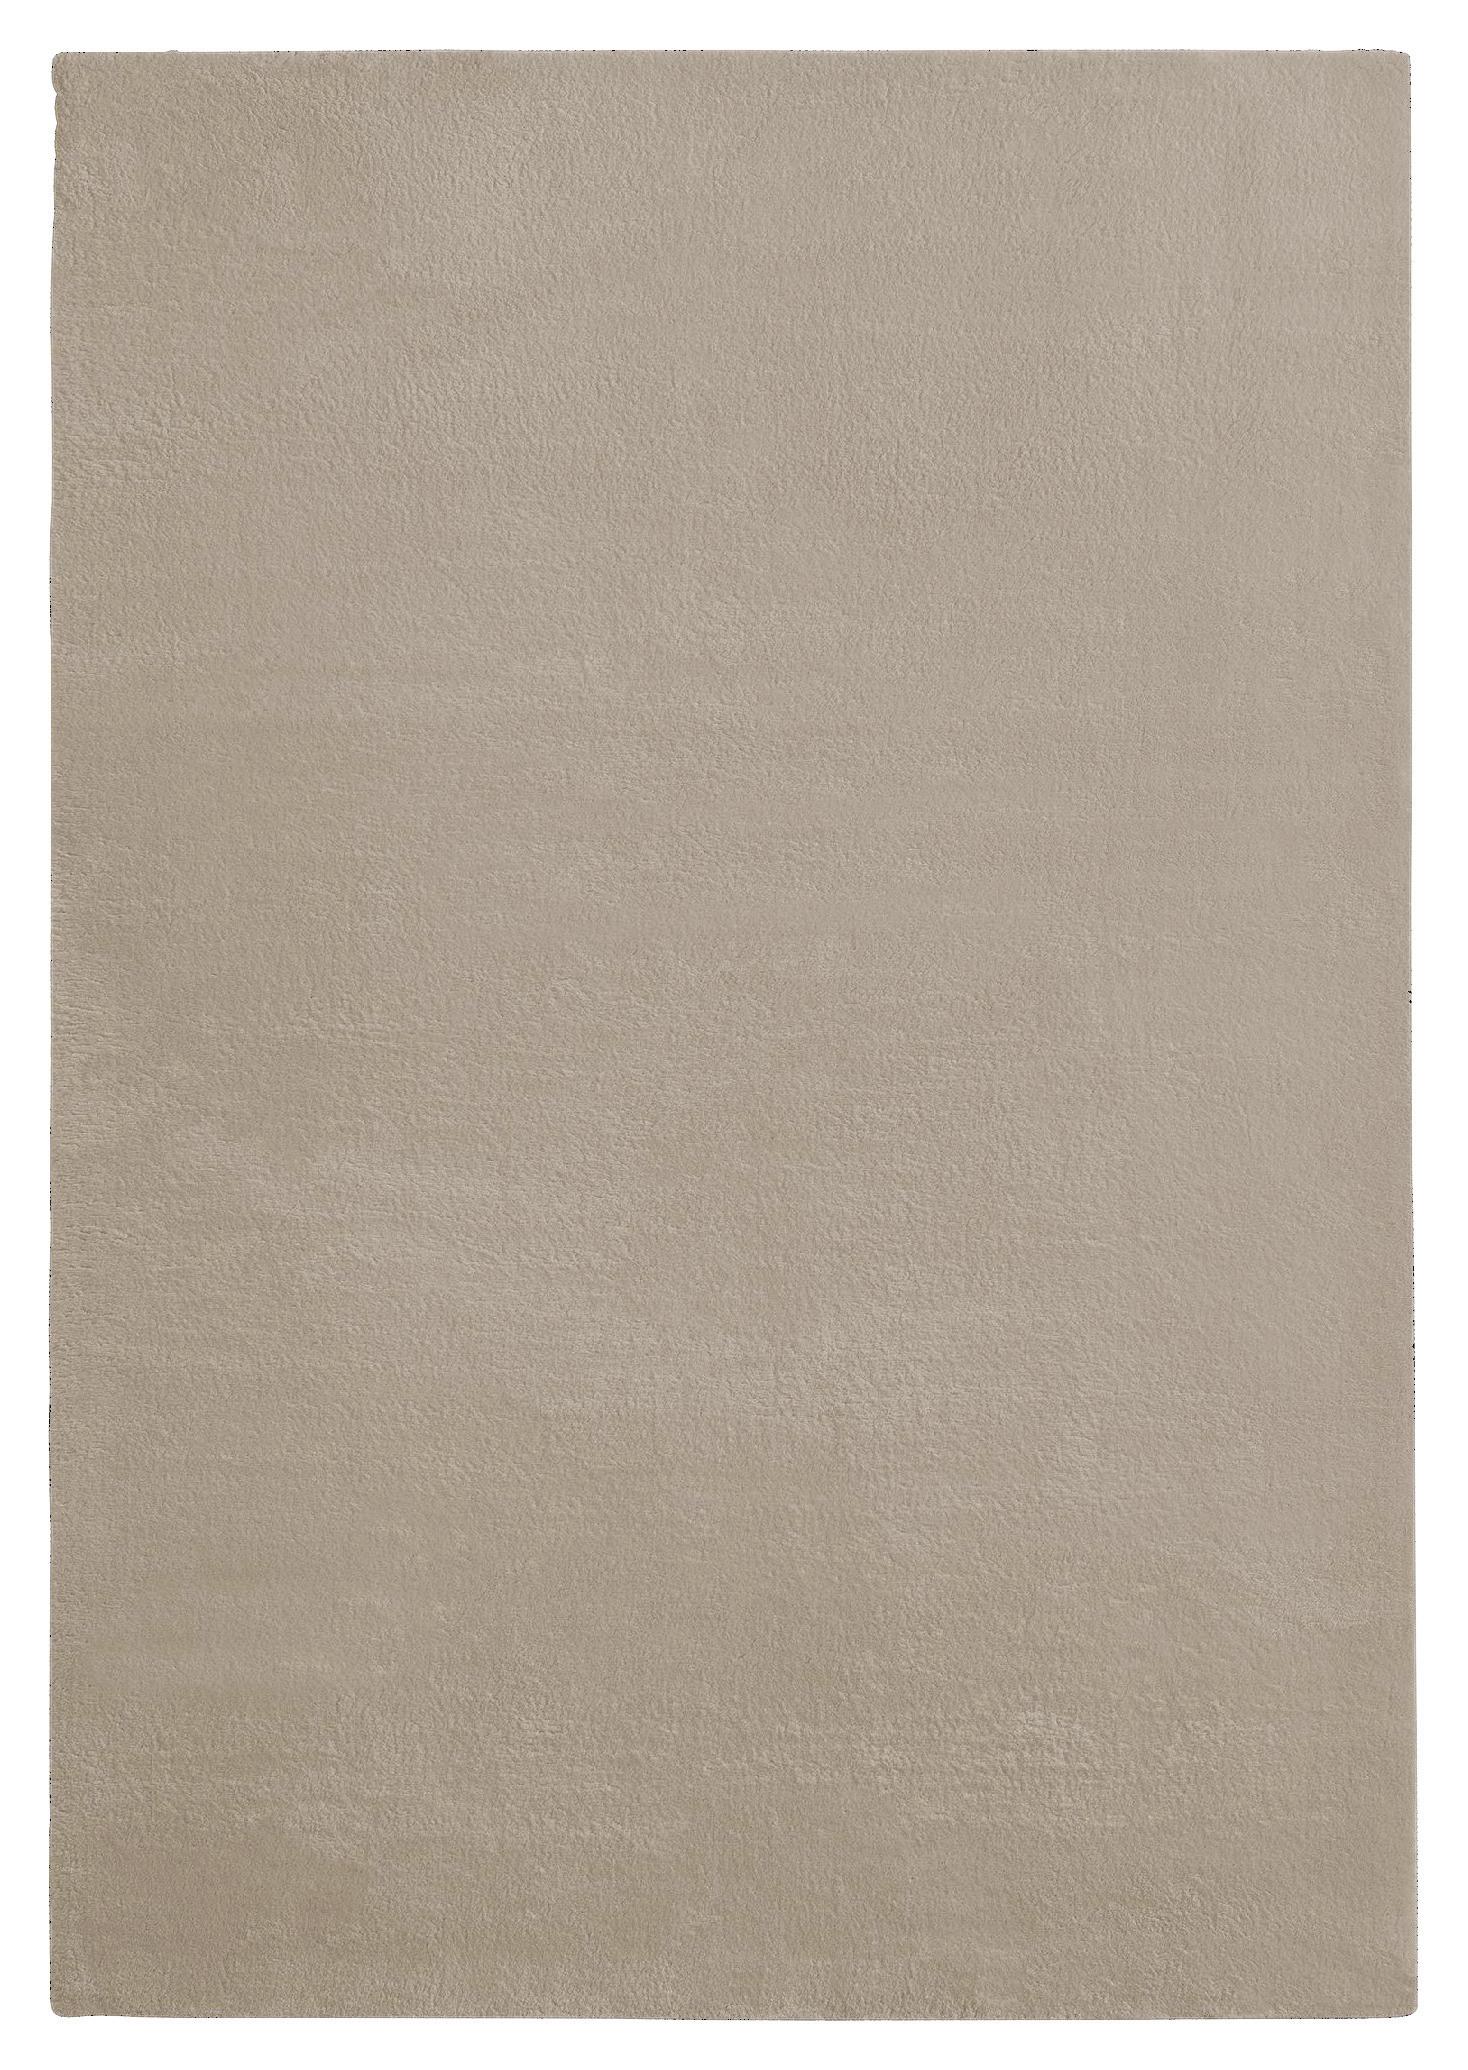 Fellteppich Melisander Sandfarben 100x150 cm - Sandfarben, Basics, Textil (100/150cm) - Luca Bessoni